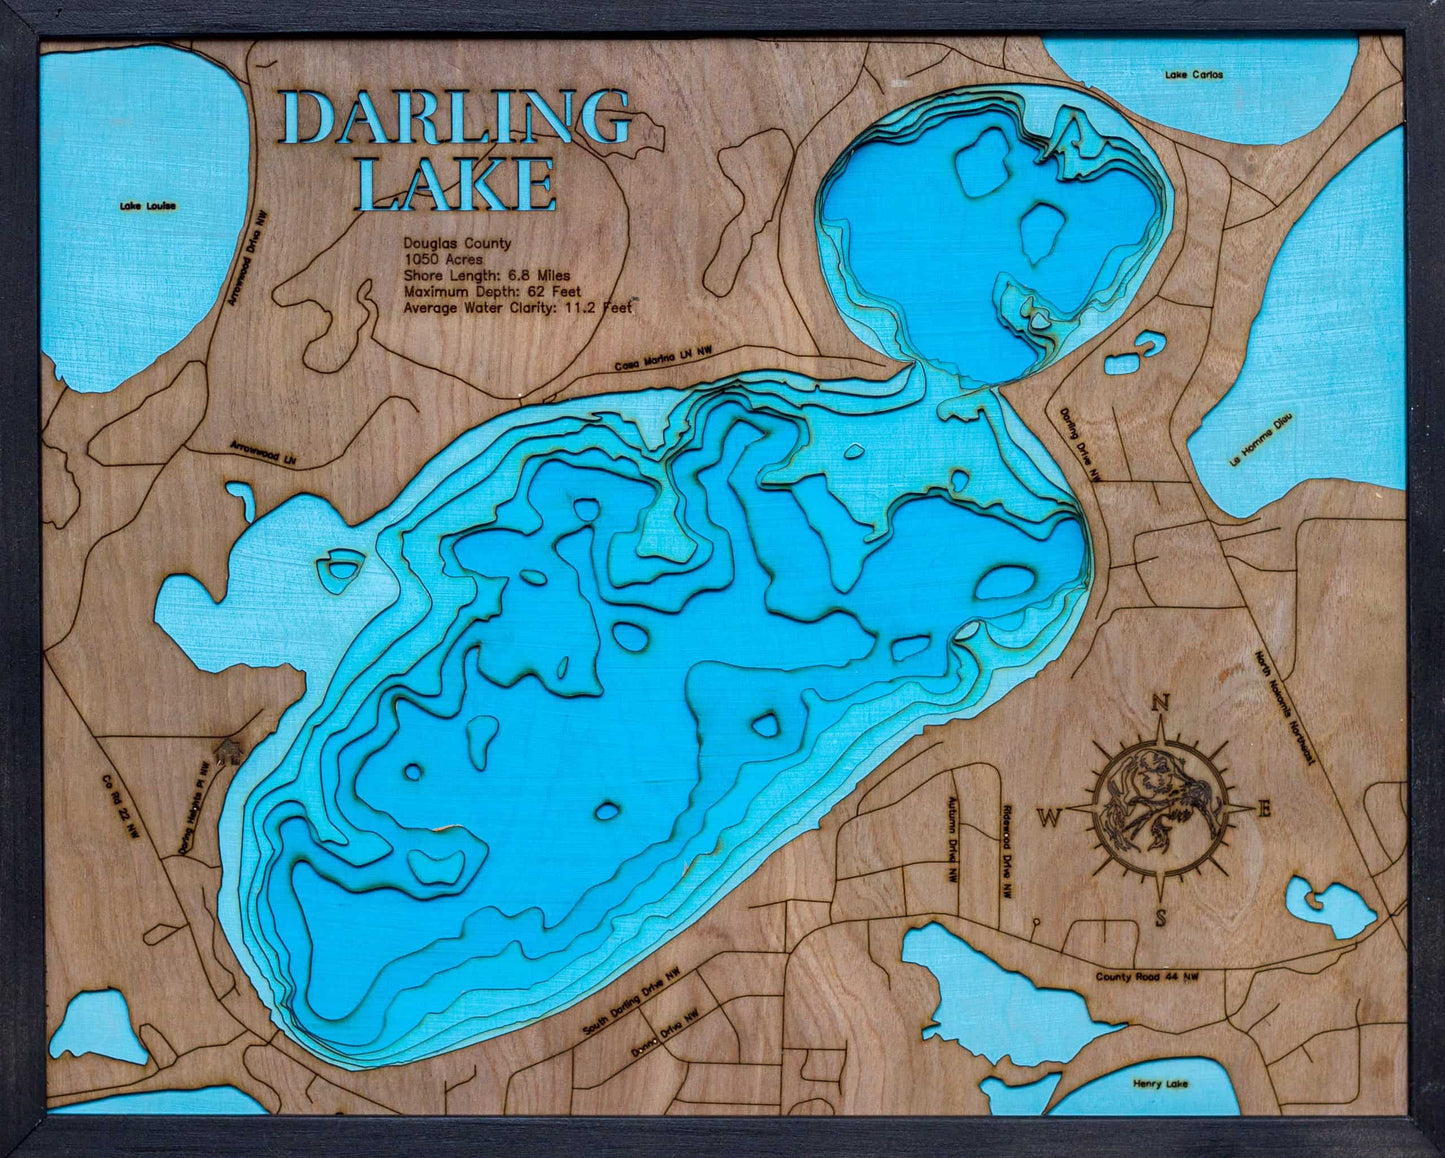 3d Depth Map of Darling Lake in Douglas County, MN